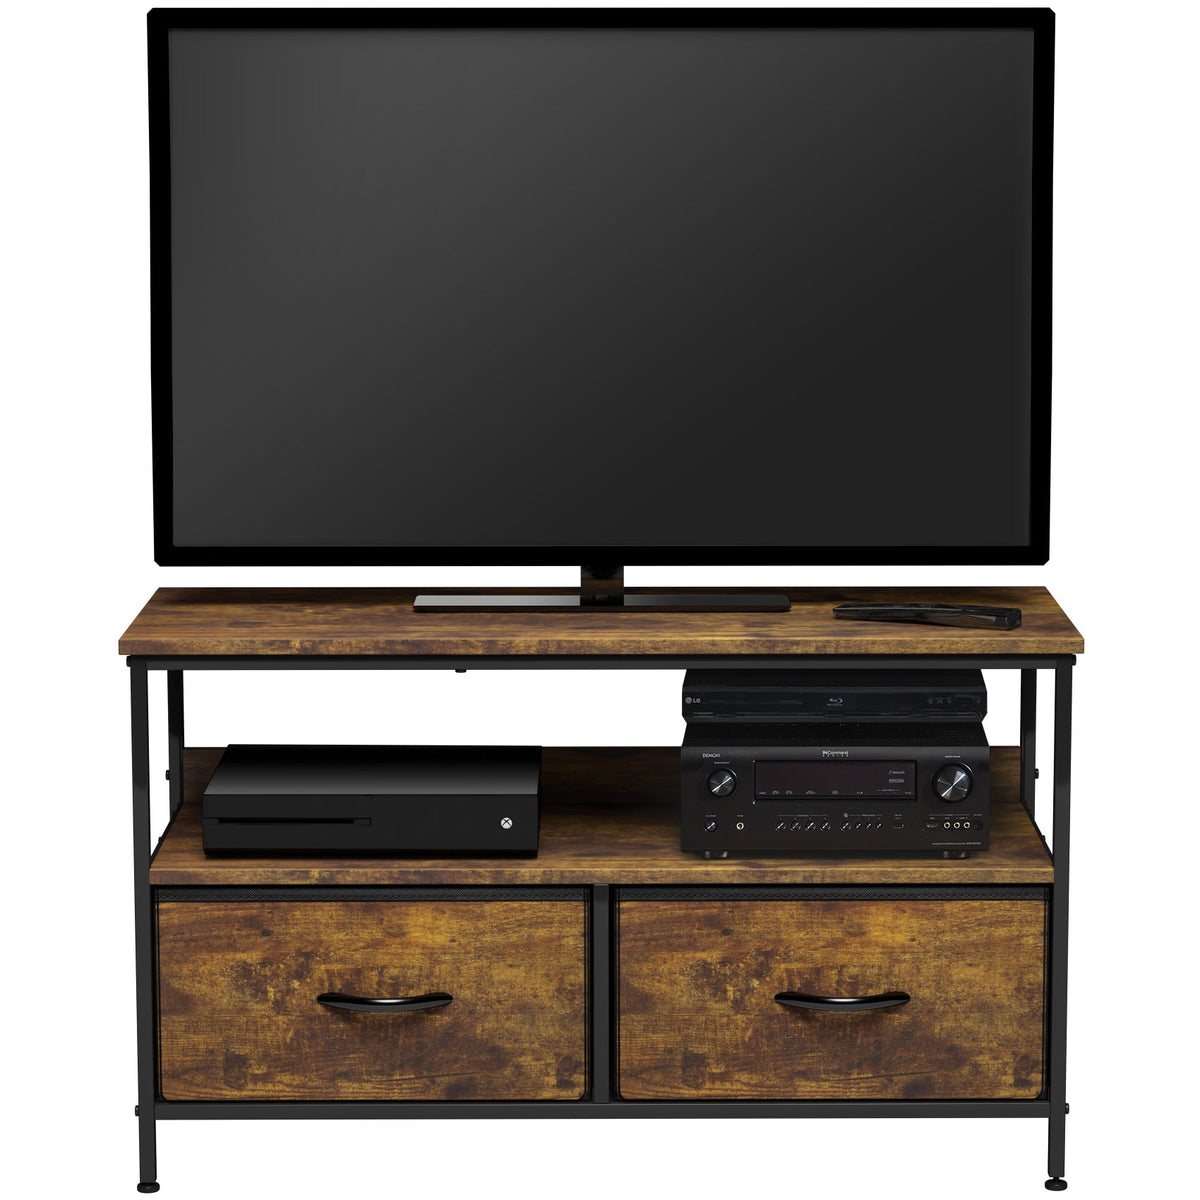 Sorbus TV Stand Dresser for Bedroom